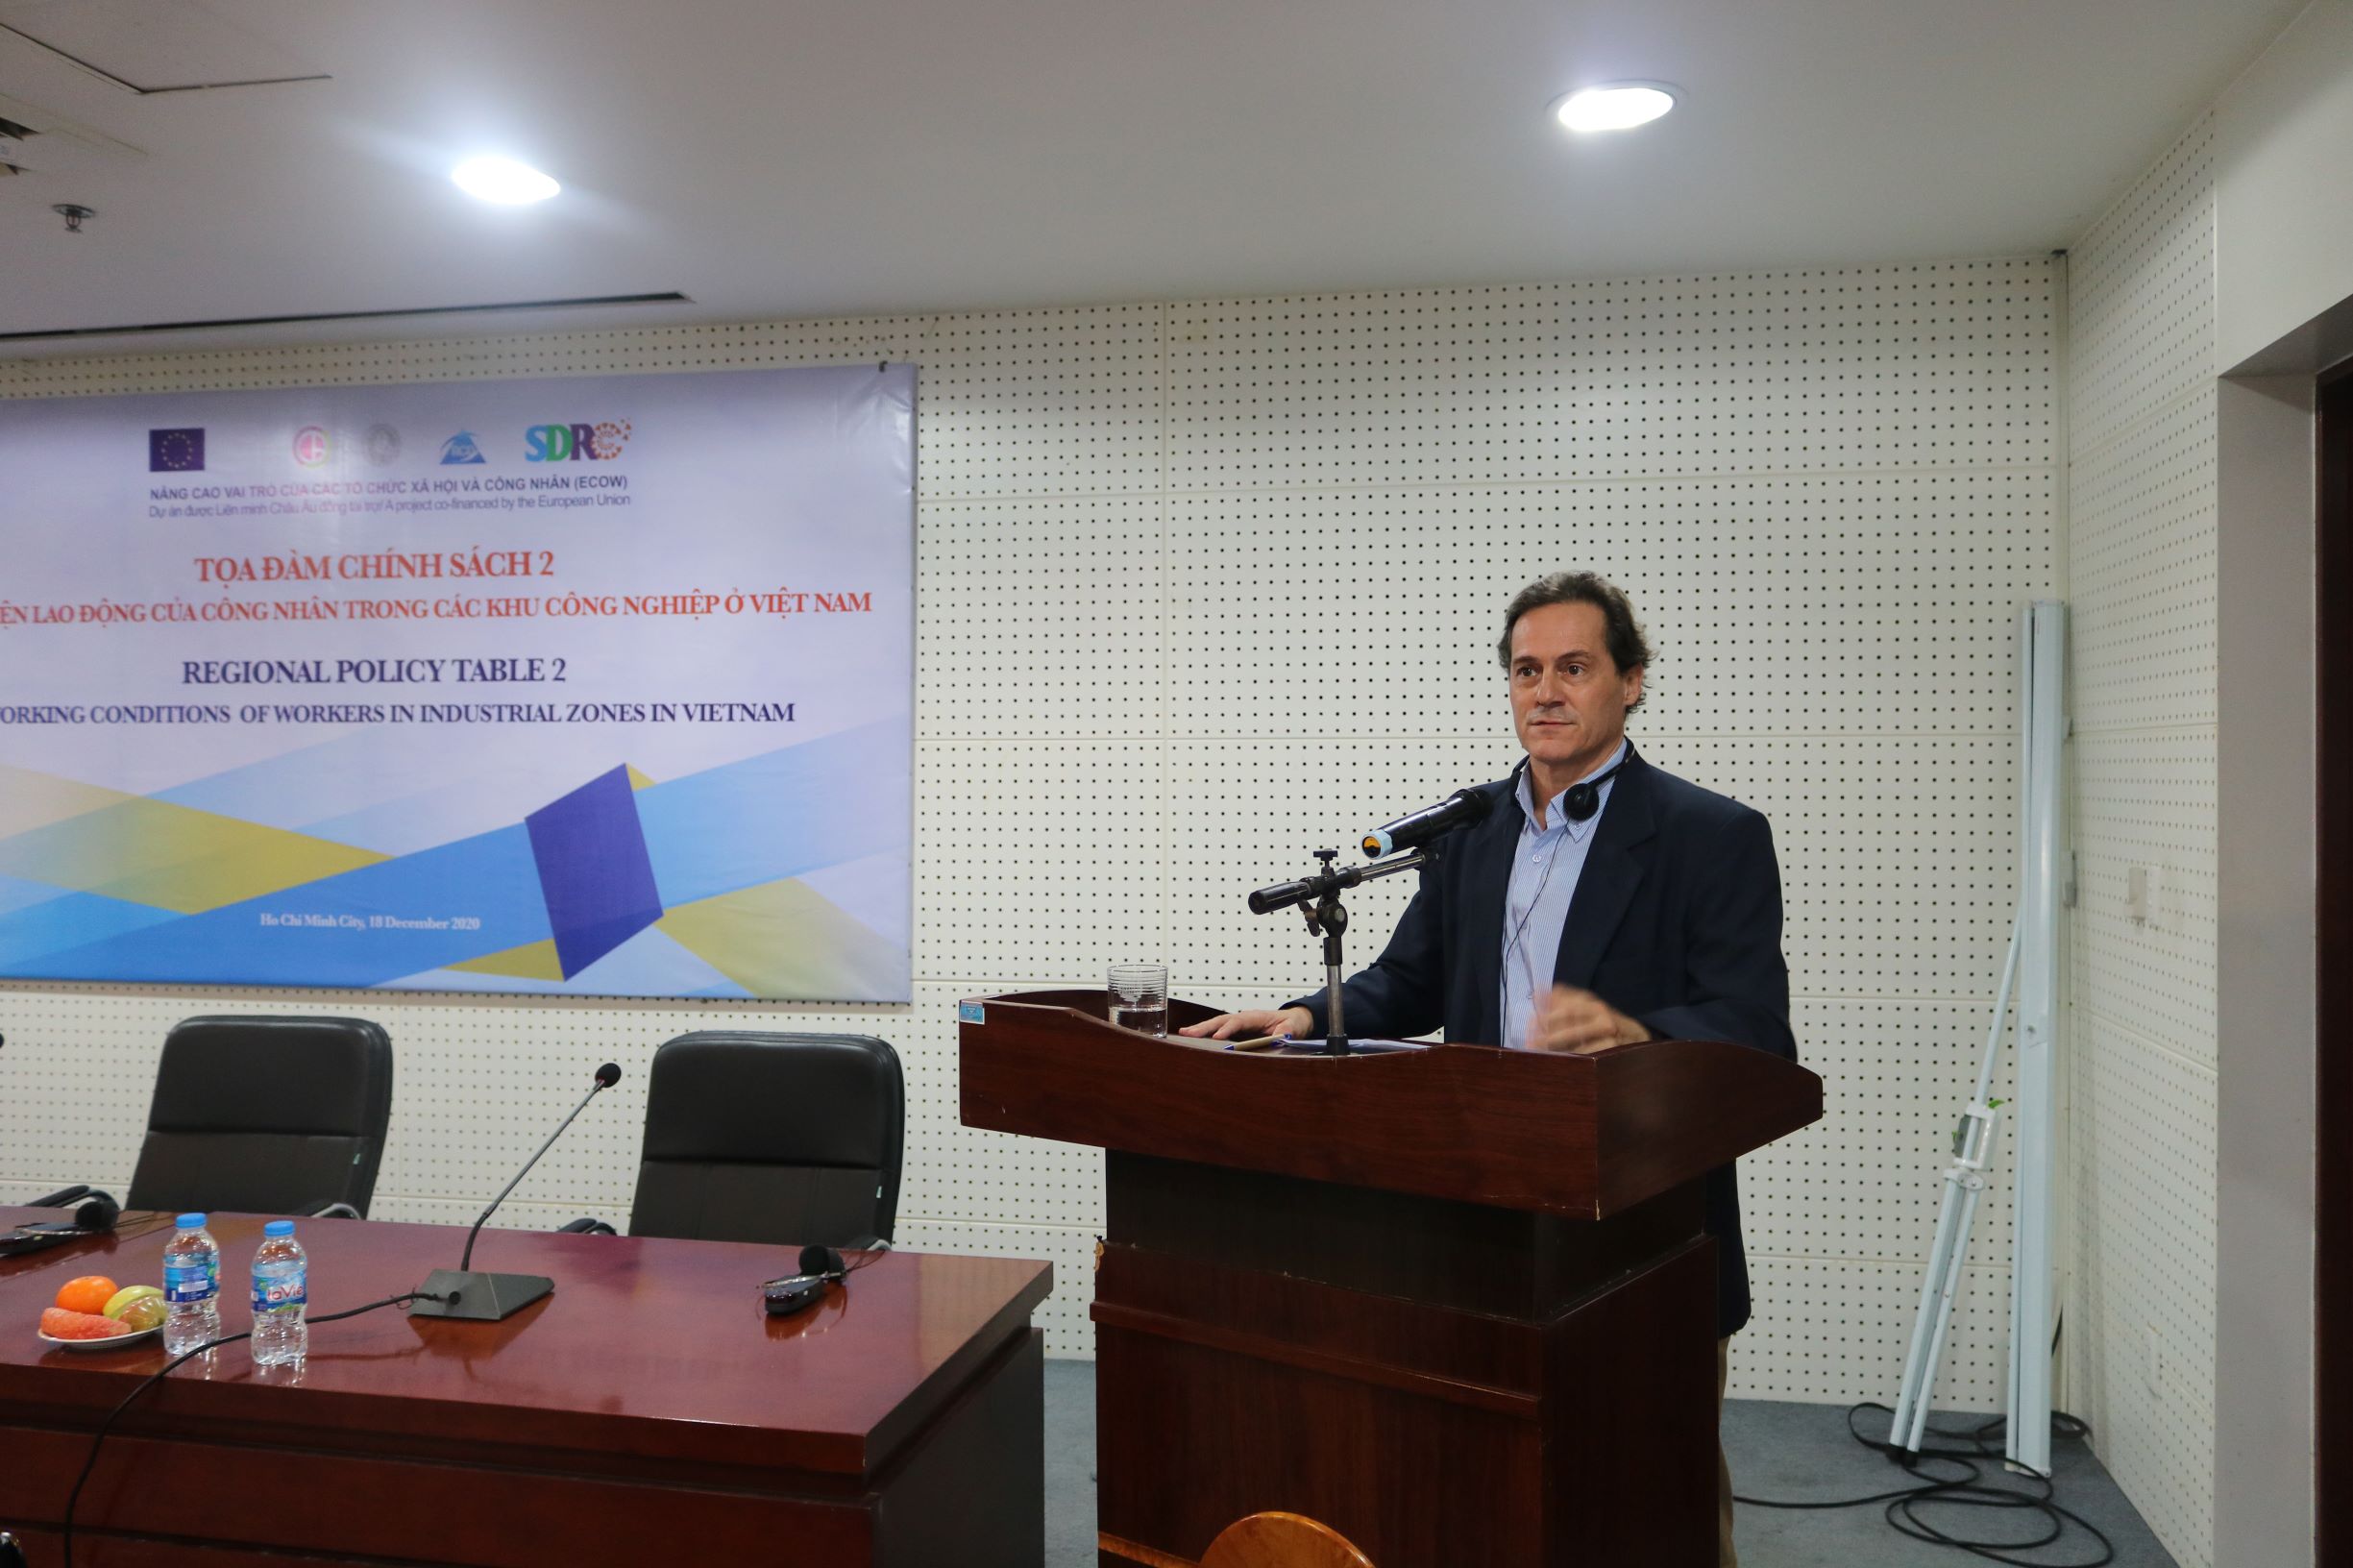 Mr. Jesús Lavina, Deputy Head of the Cooperation Department, EU Delegation to Vietnam delivered a speech